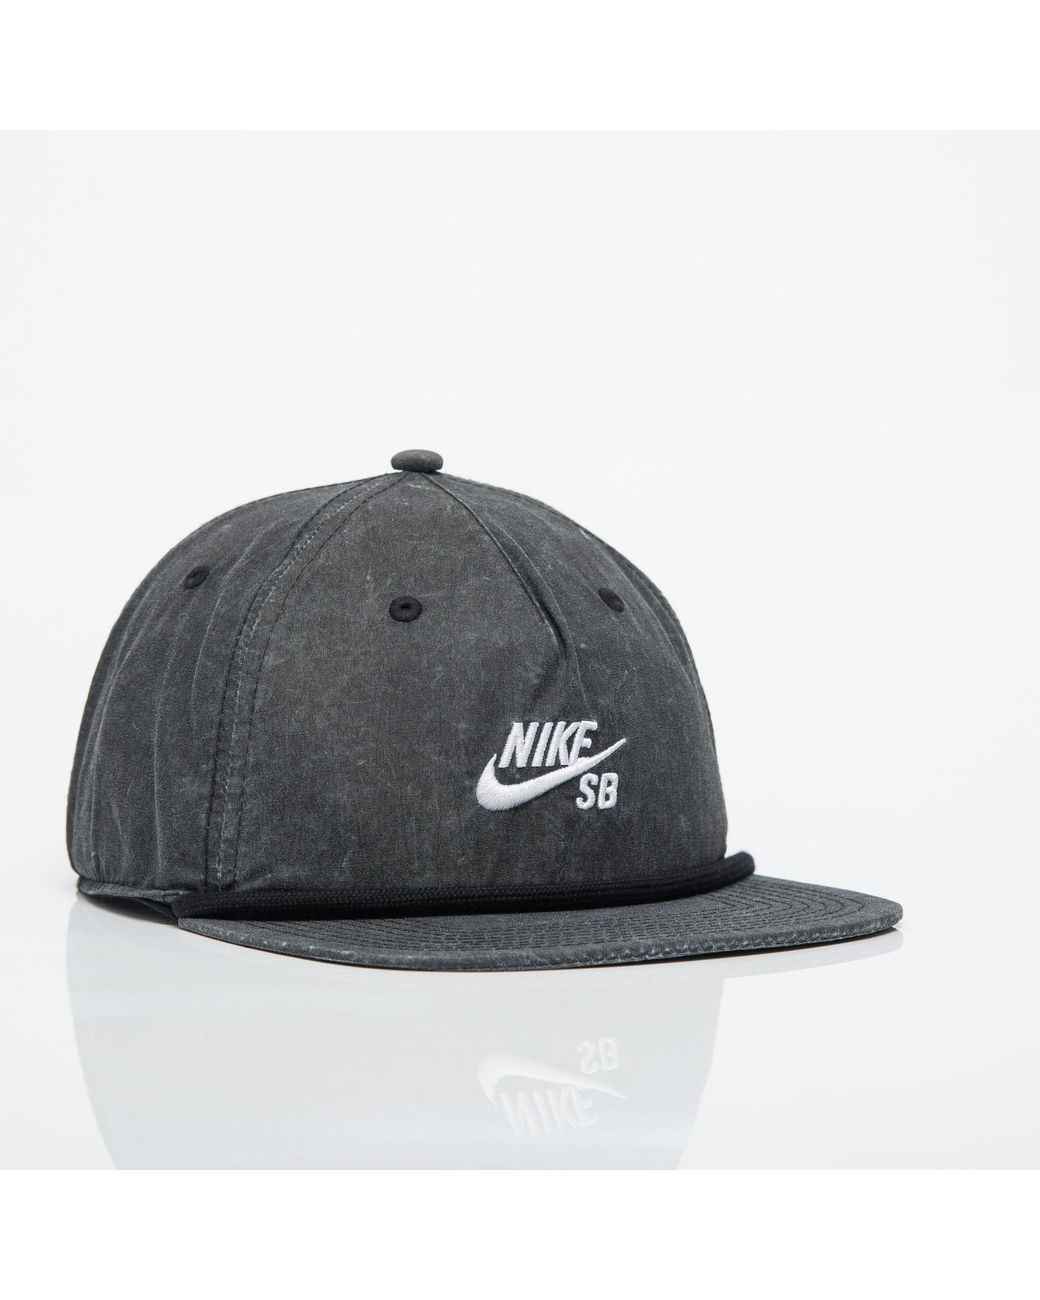 Nike Sb Pro Cap for Men | Lyst